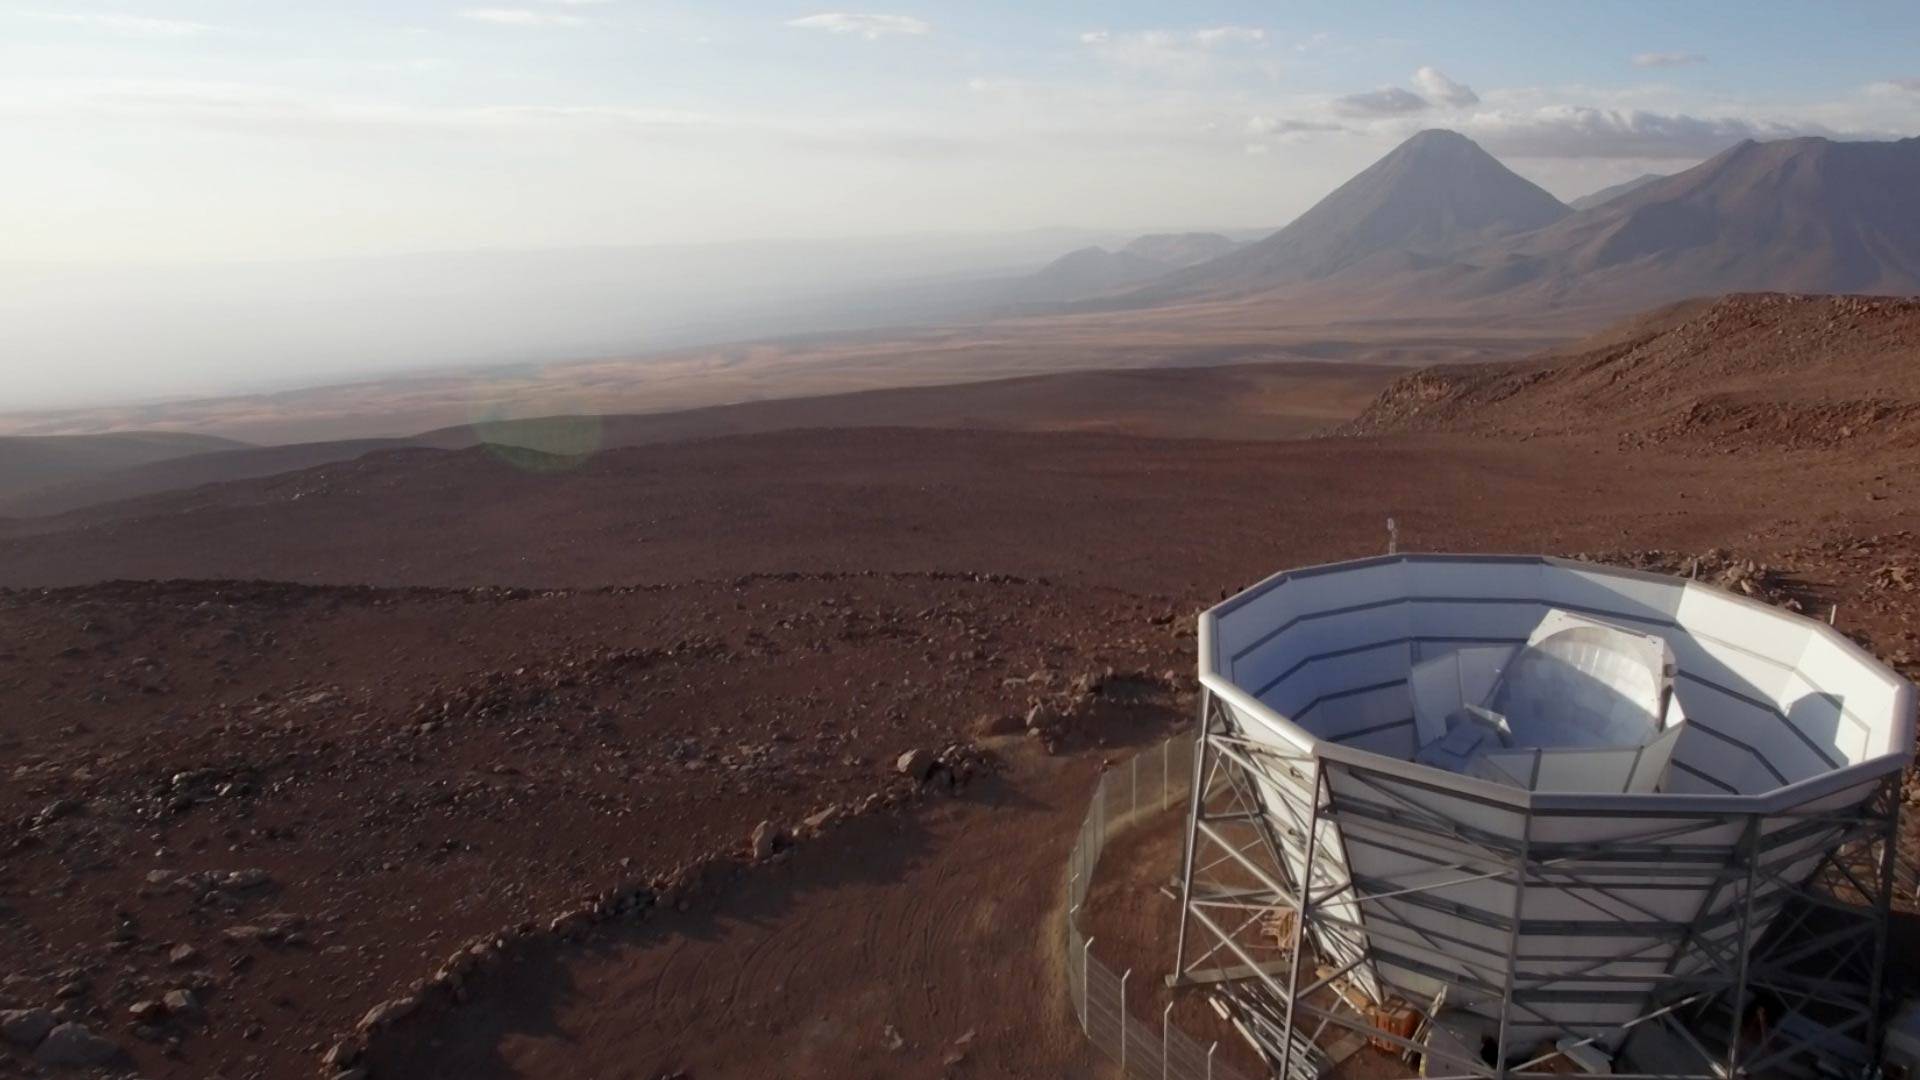 Atacama Desert landscape with telescope in the foreground